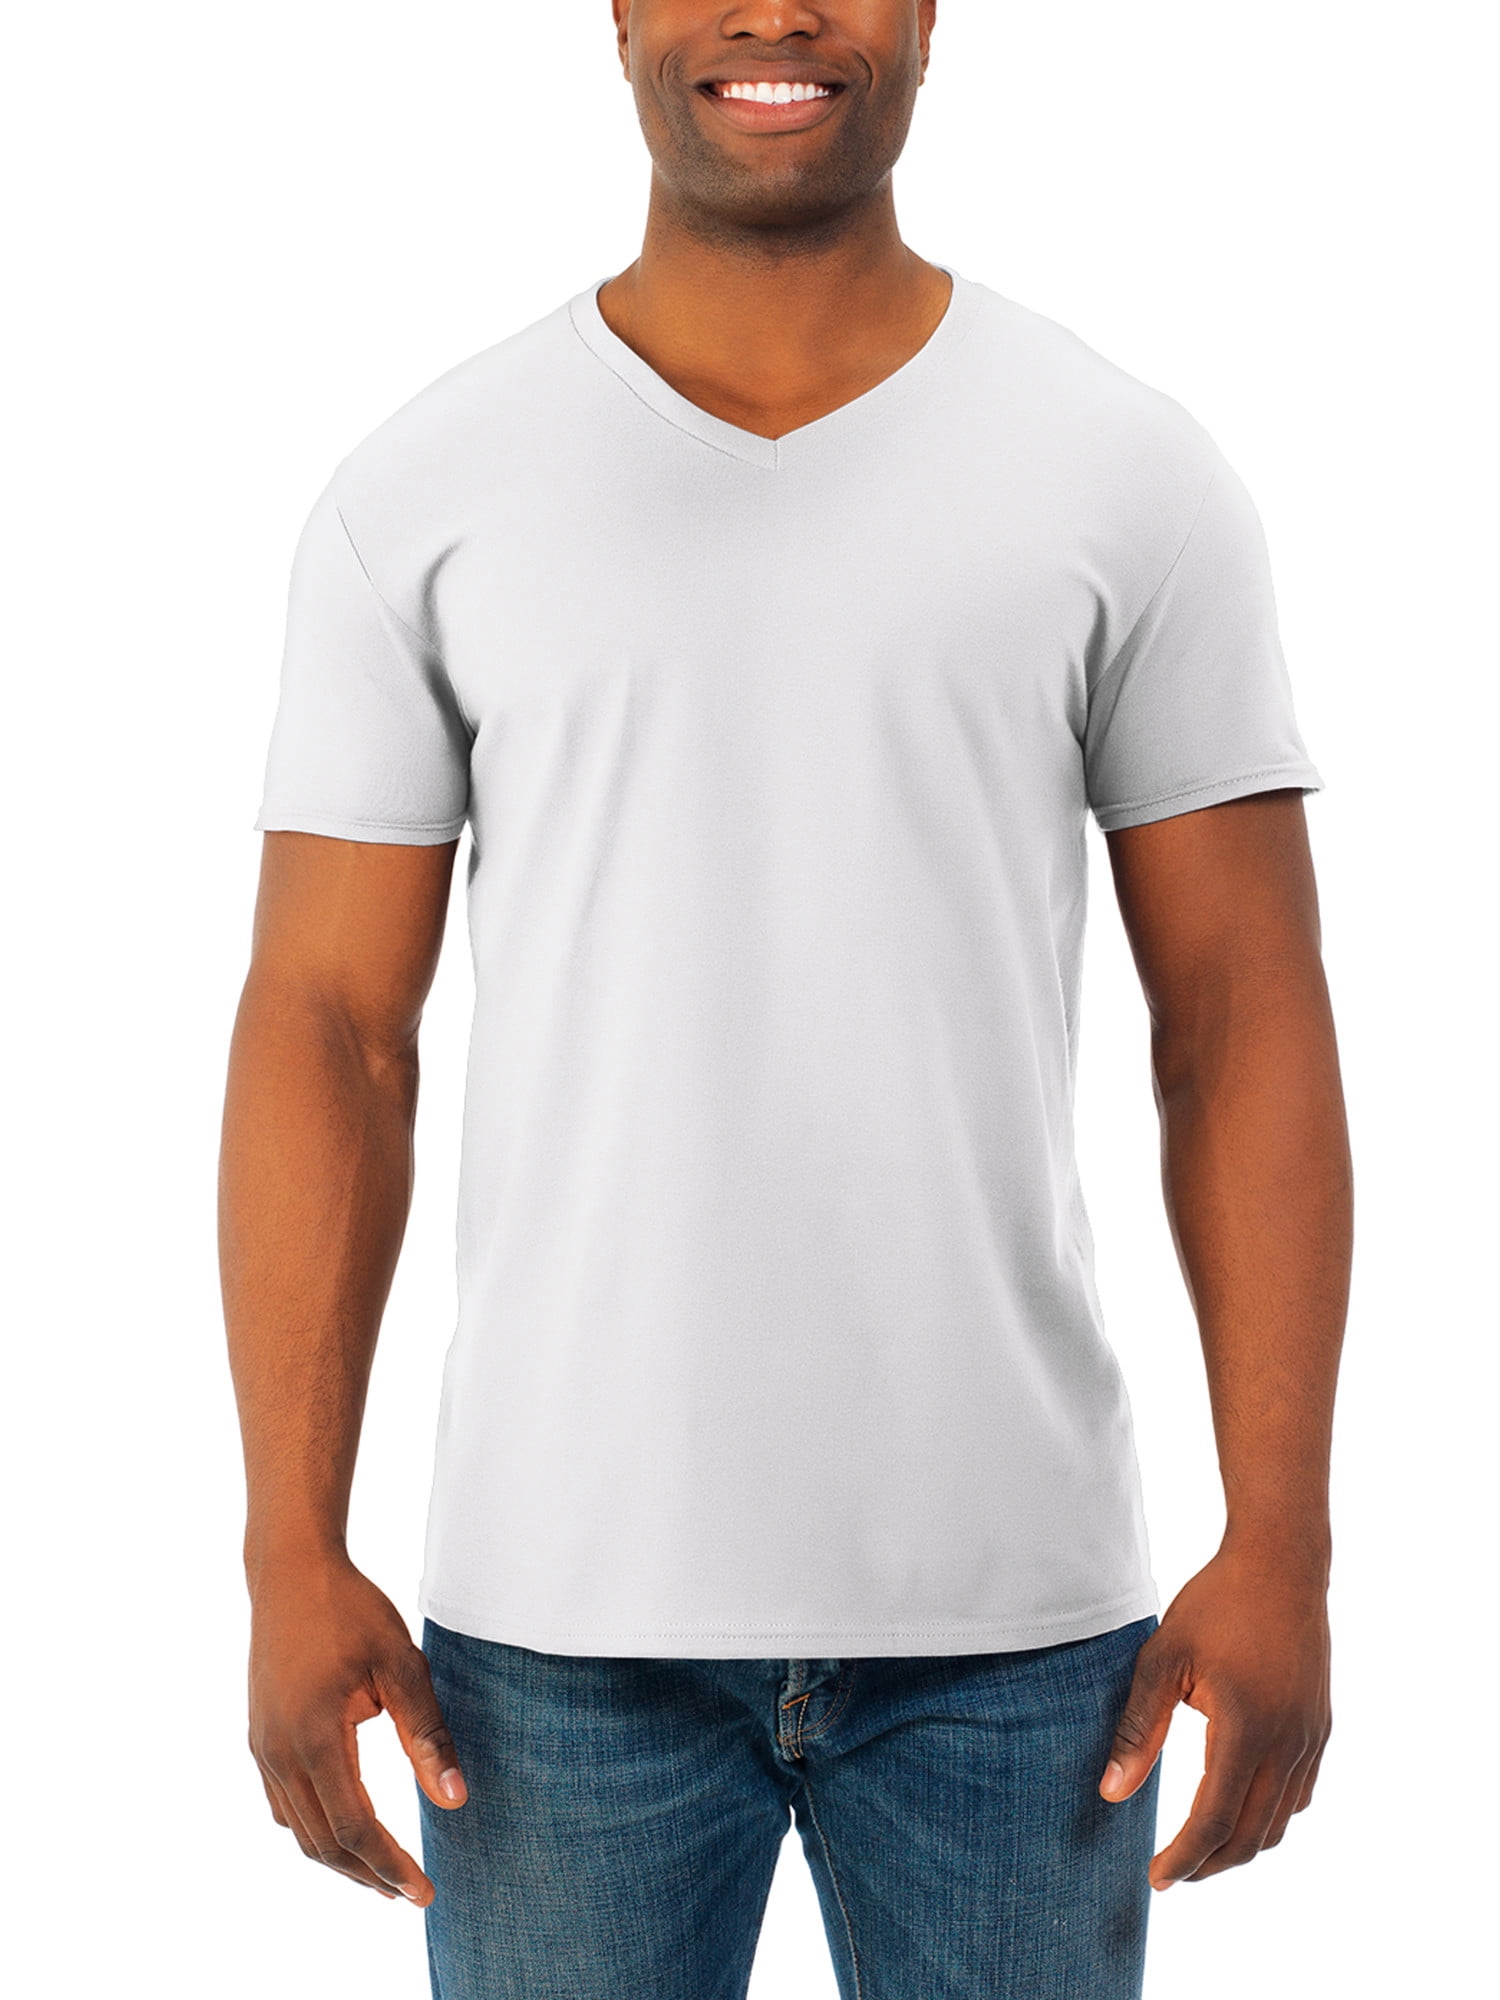 Fruit of the Loom Mens Lightweight Cotton V-Neck T-Shirt Multipack 